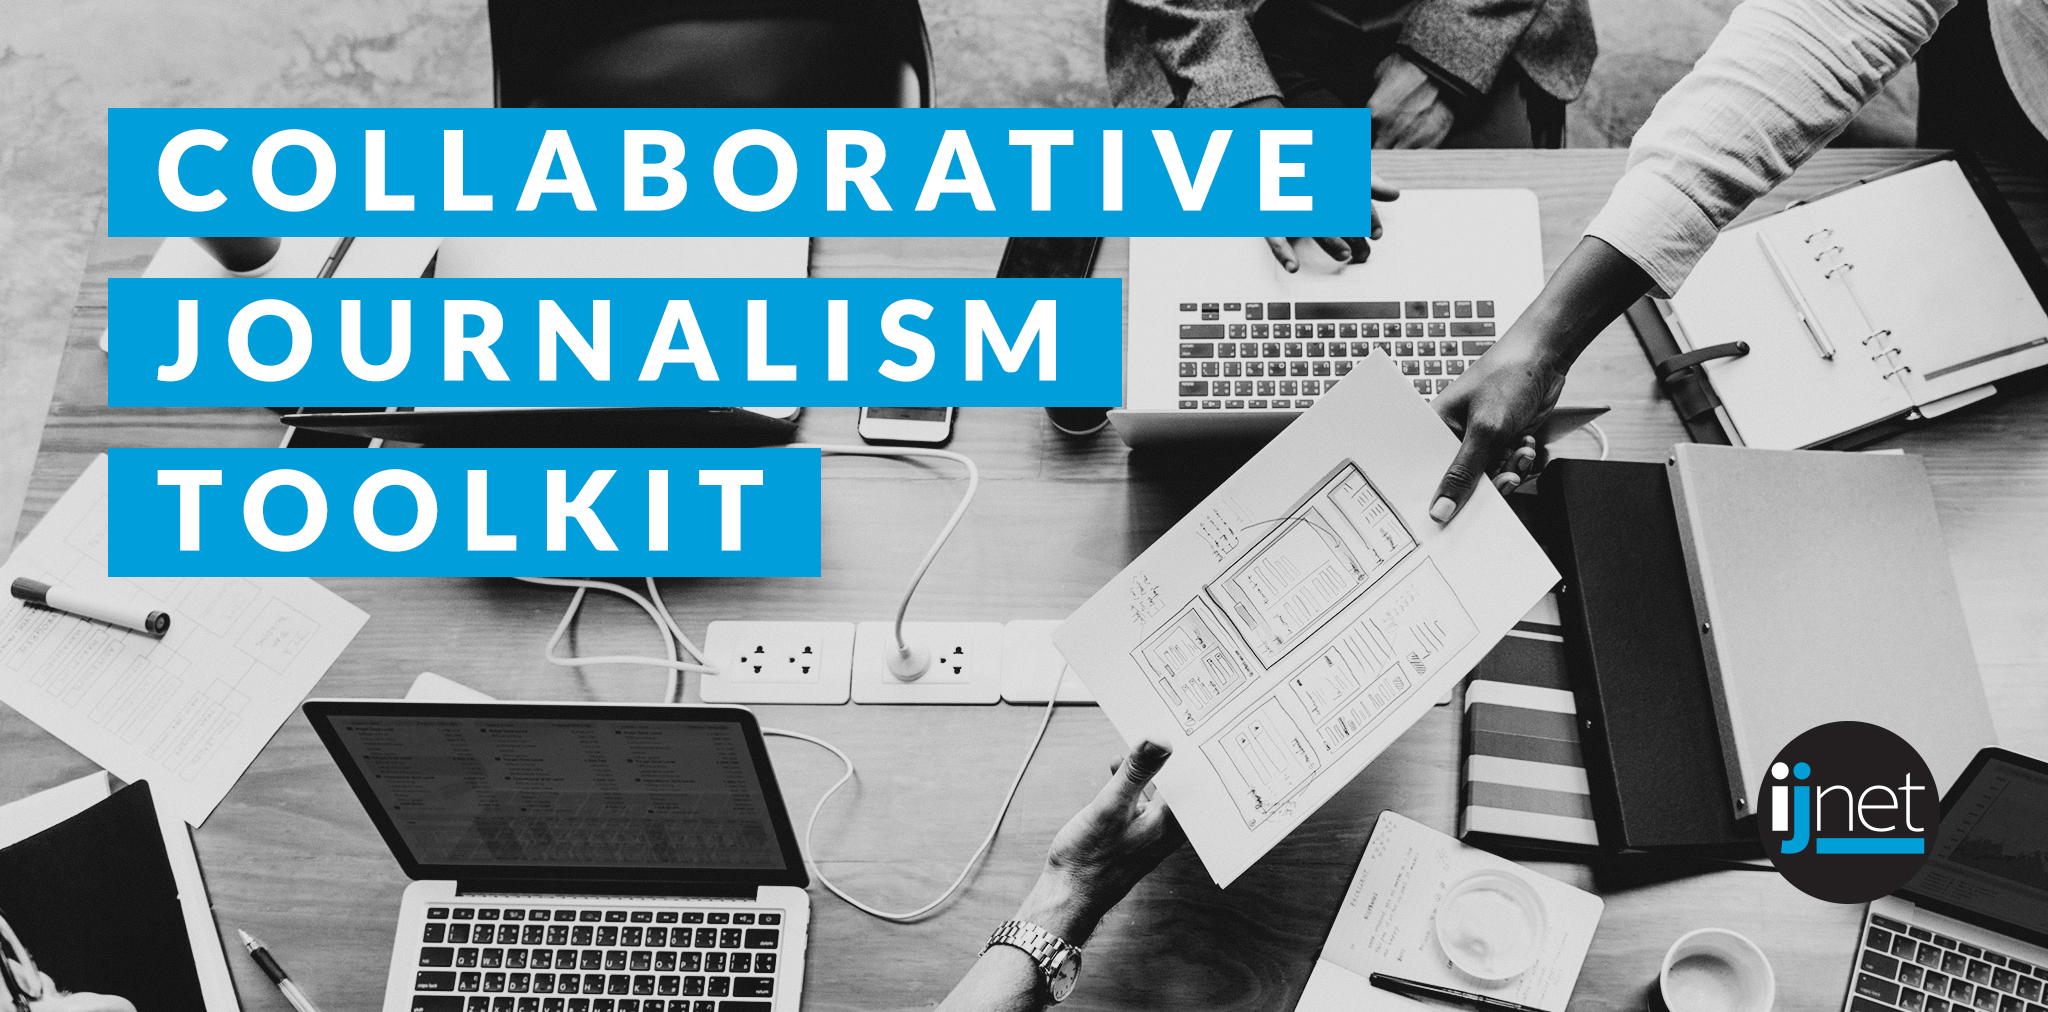 Collaborative journalism toolkit